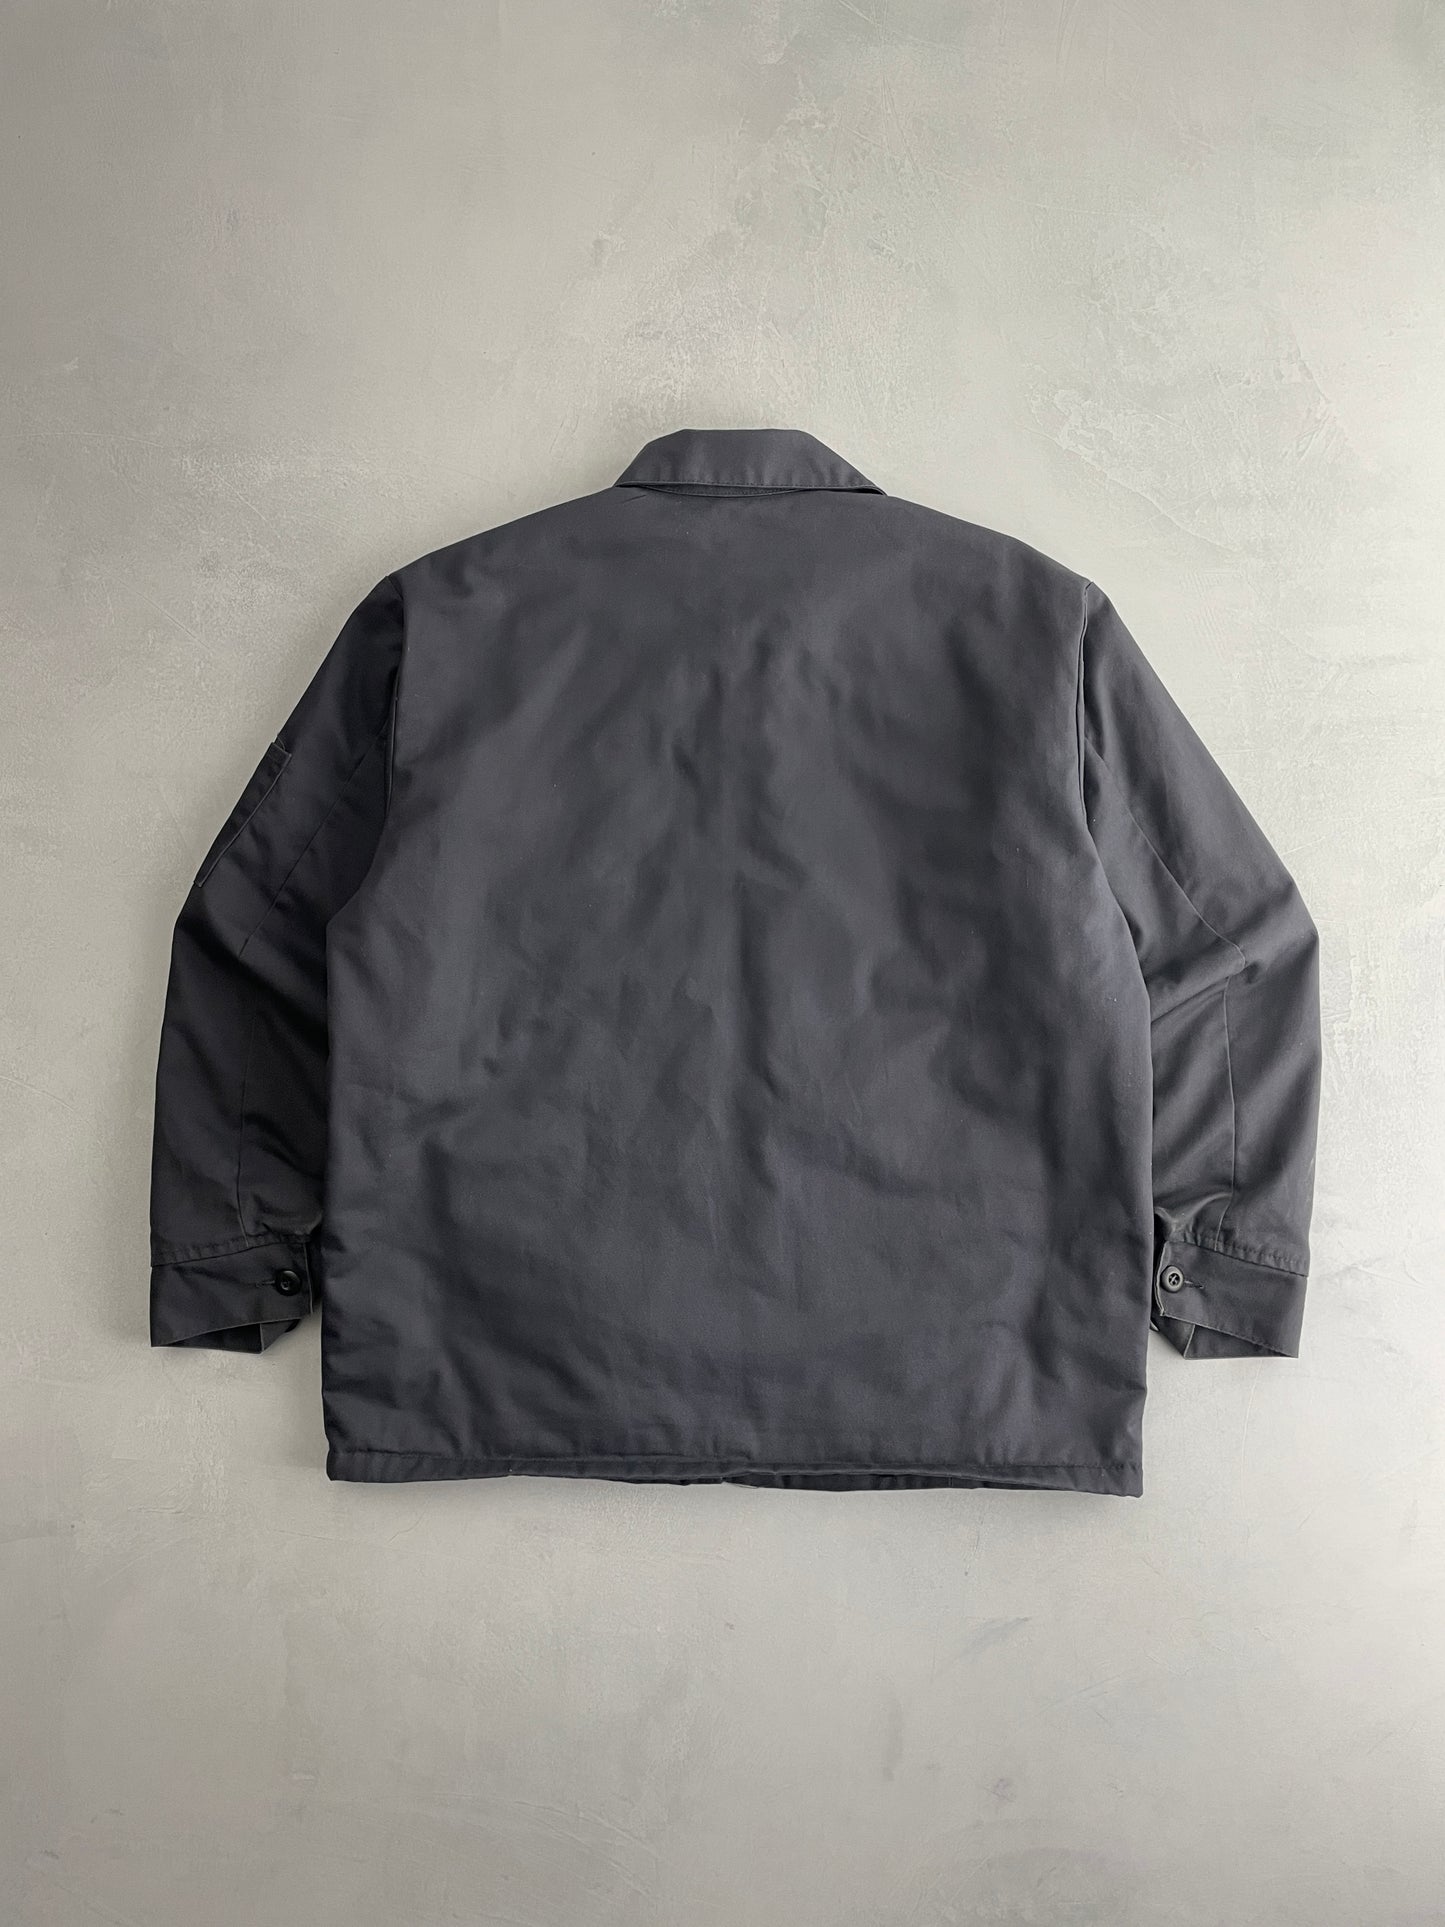 Jiffy Lube Work Jacket [XL]